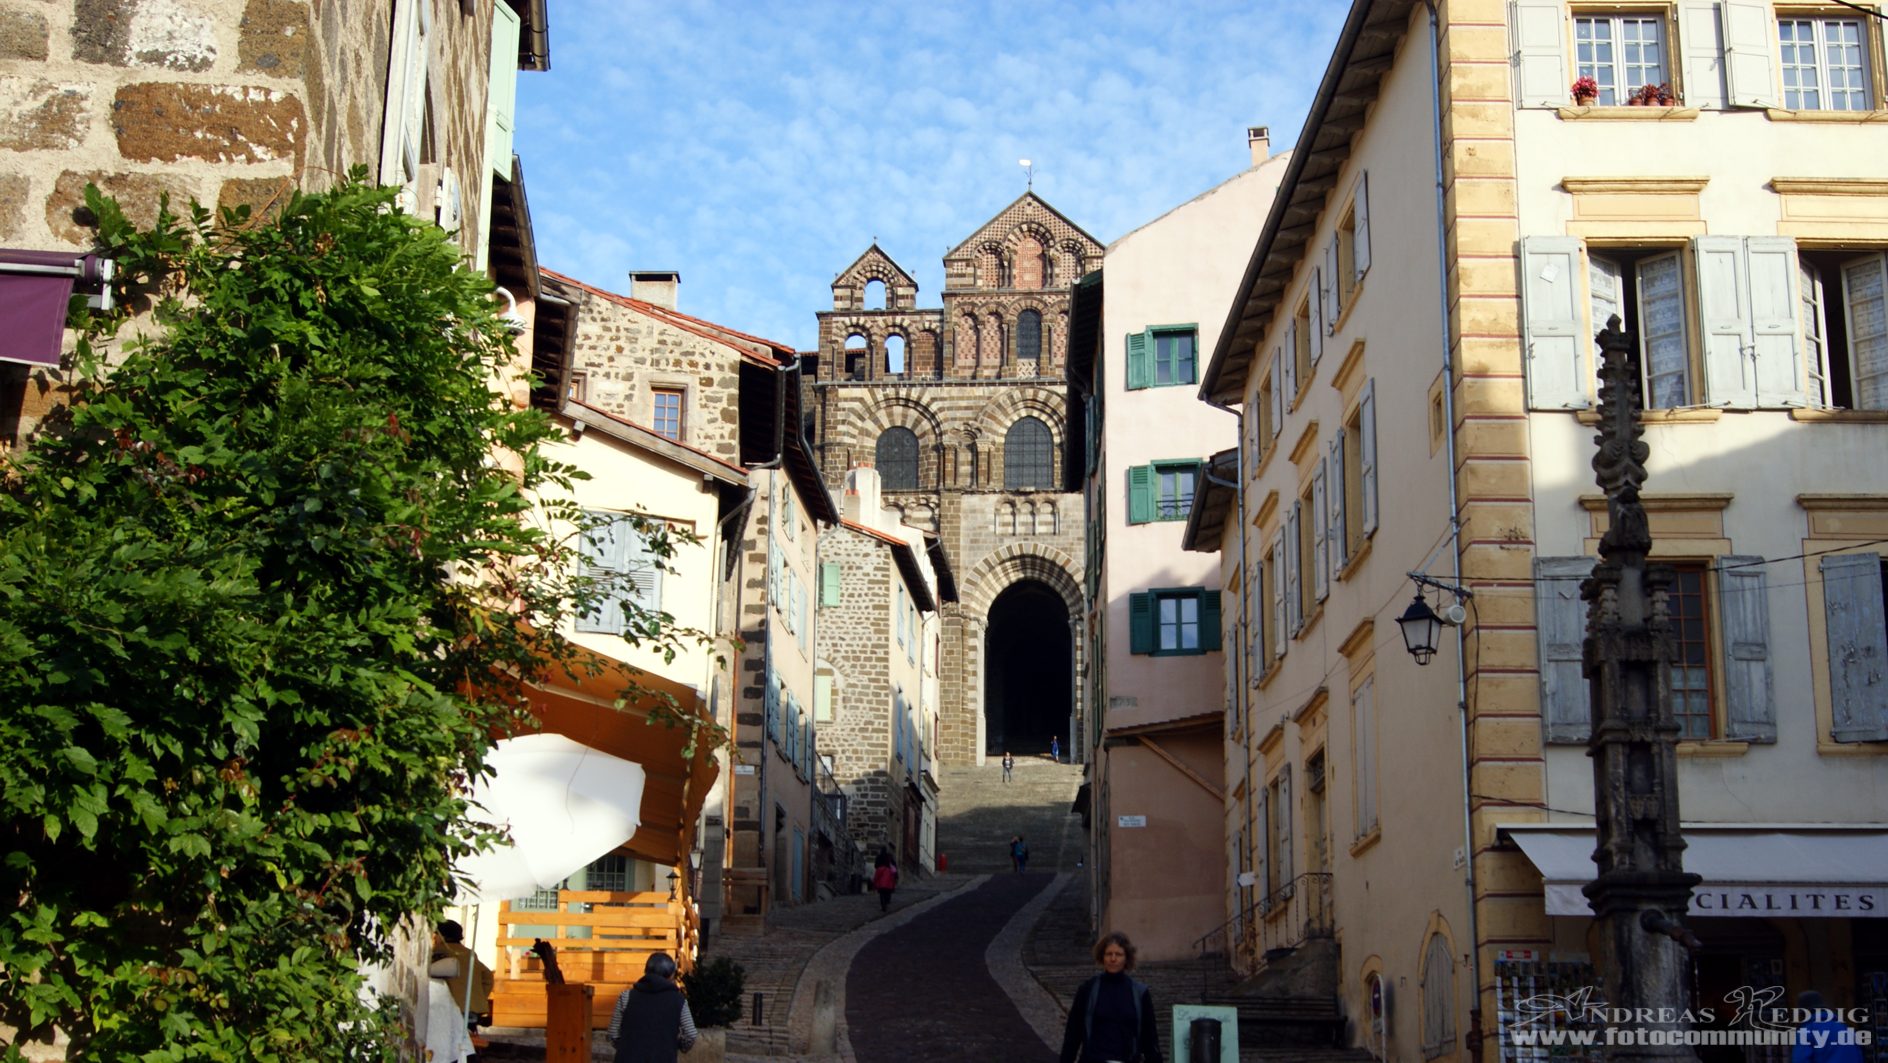 28.10.2014 - Le Puy En Velay - Le Puy Cathedral